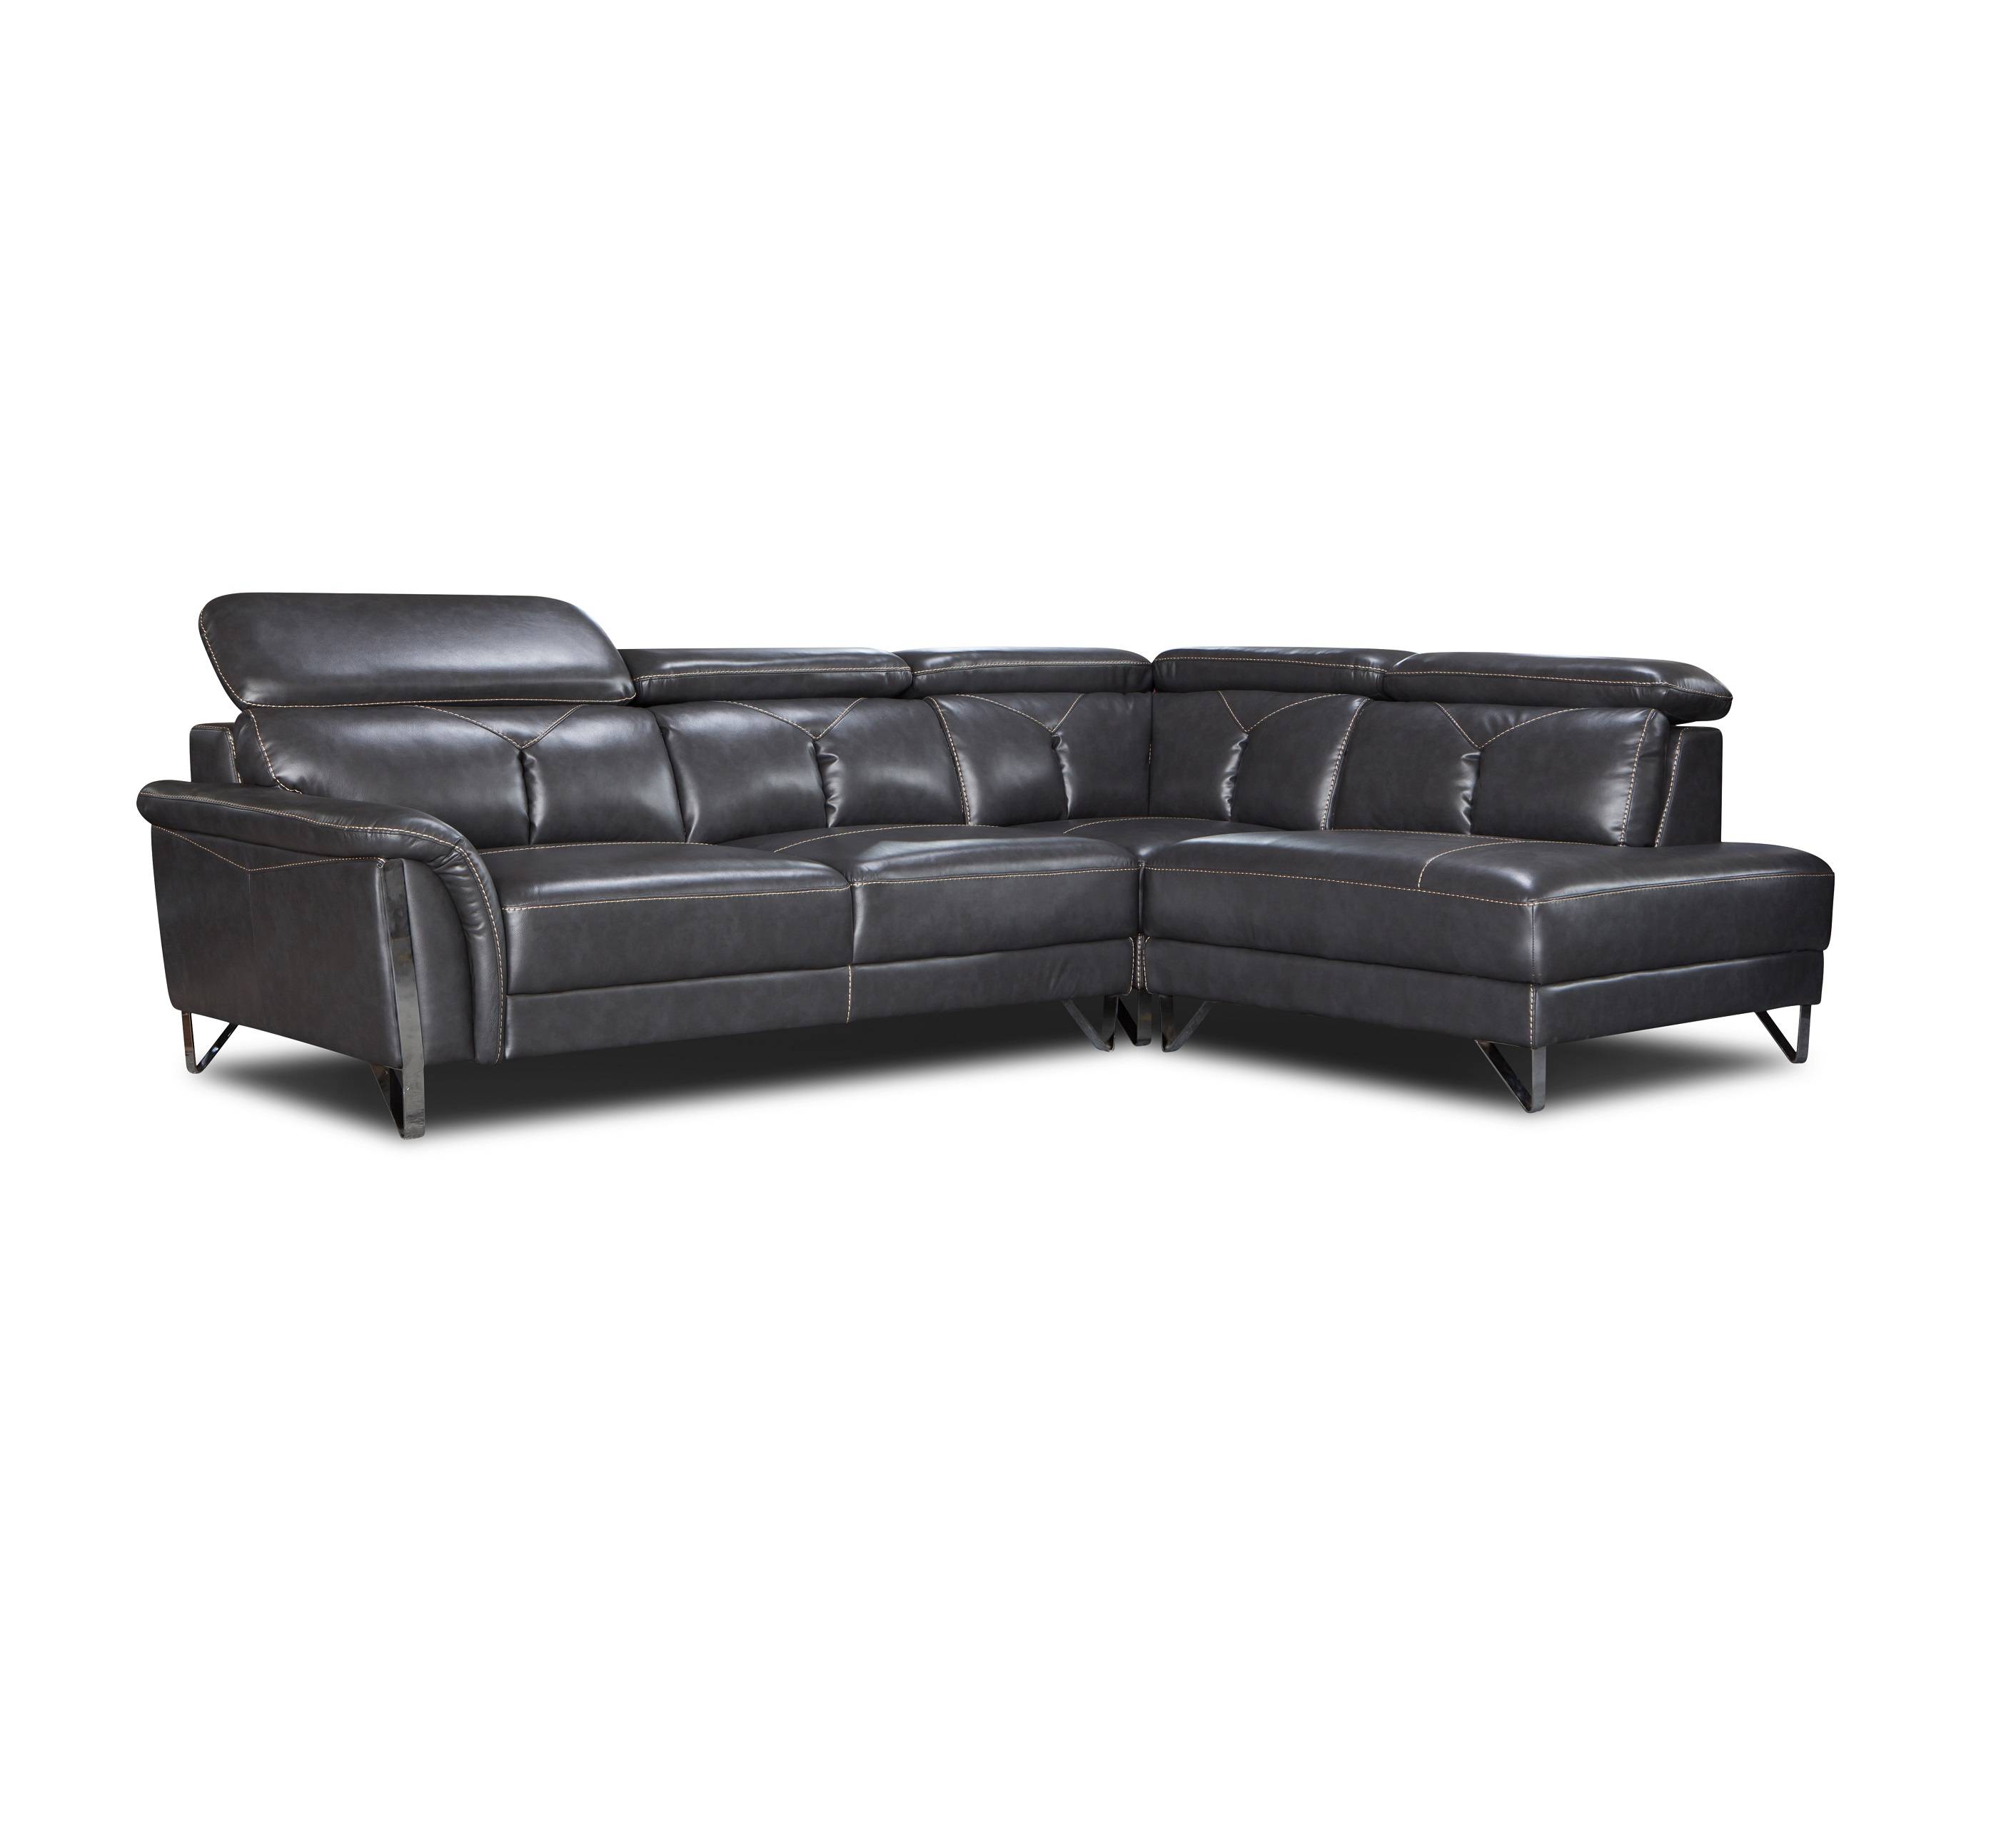 2019 latest leisure leather corner lounge sofa chaise